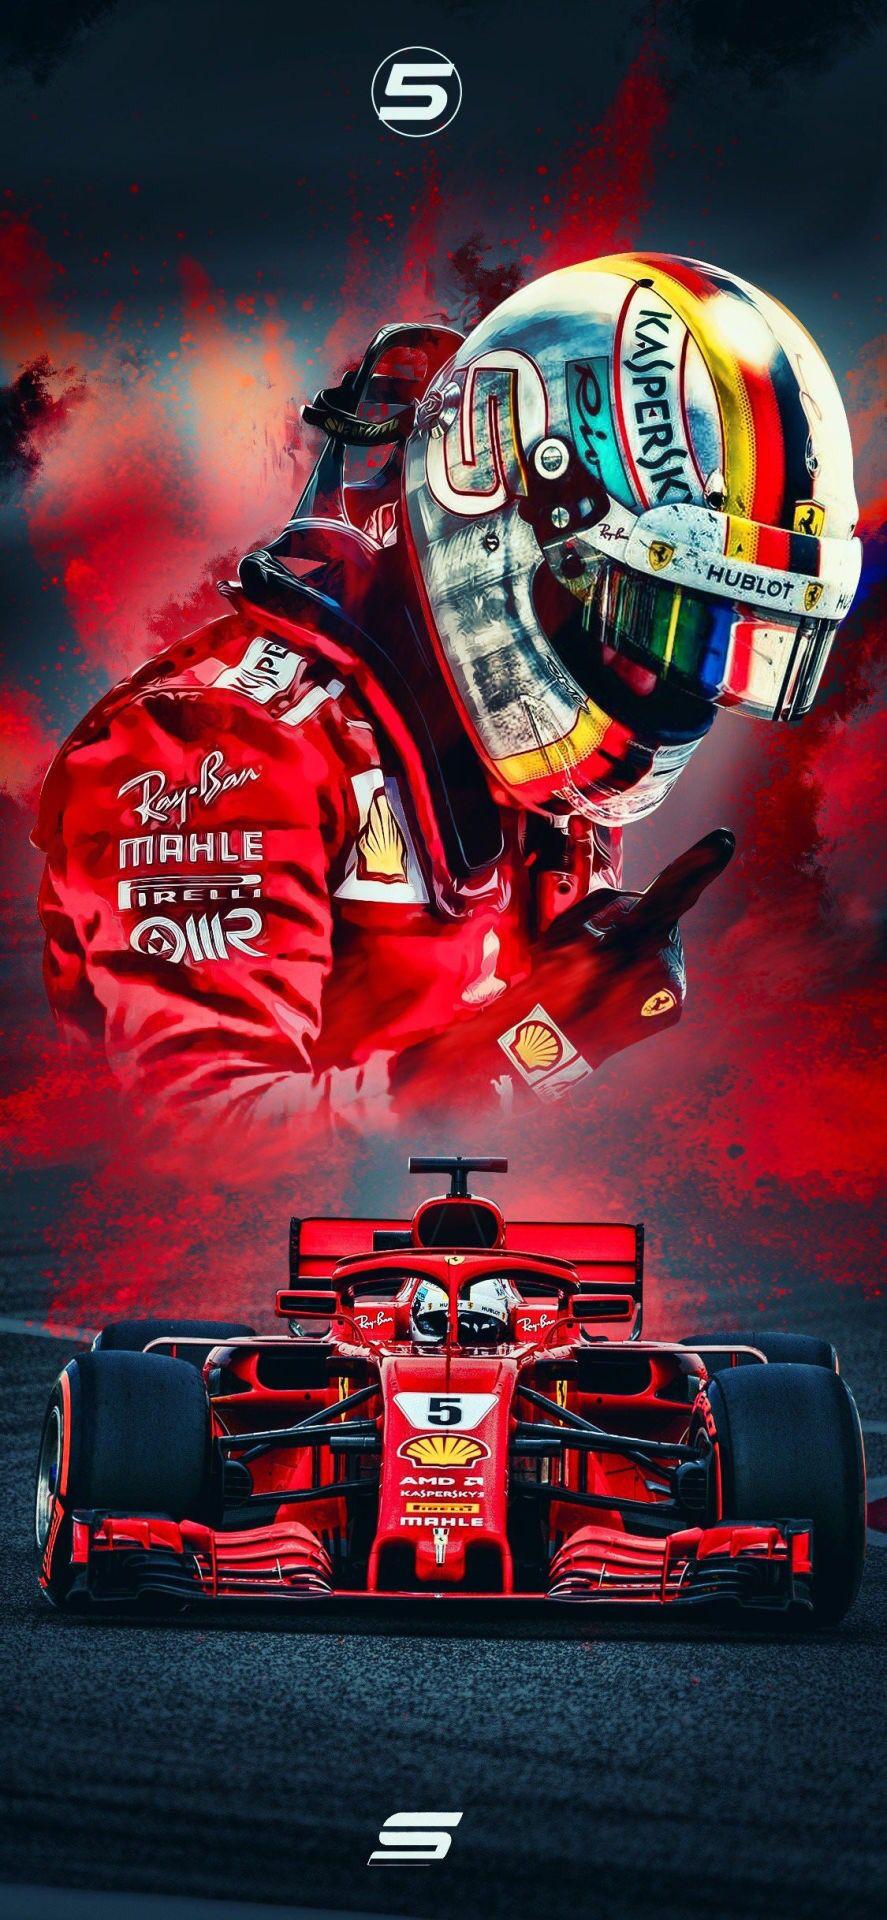 Top, New 53 Formula 1 Sebastian Vettel wallpaper (Free HD Download)